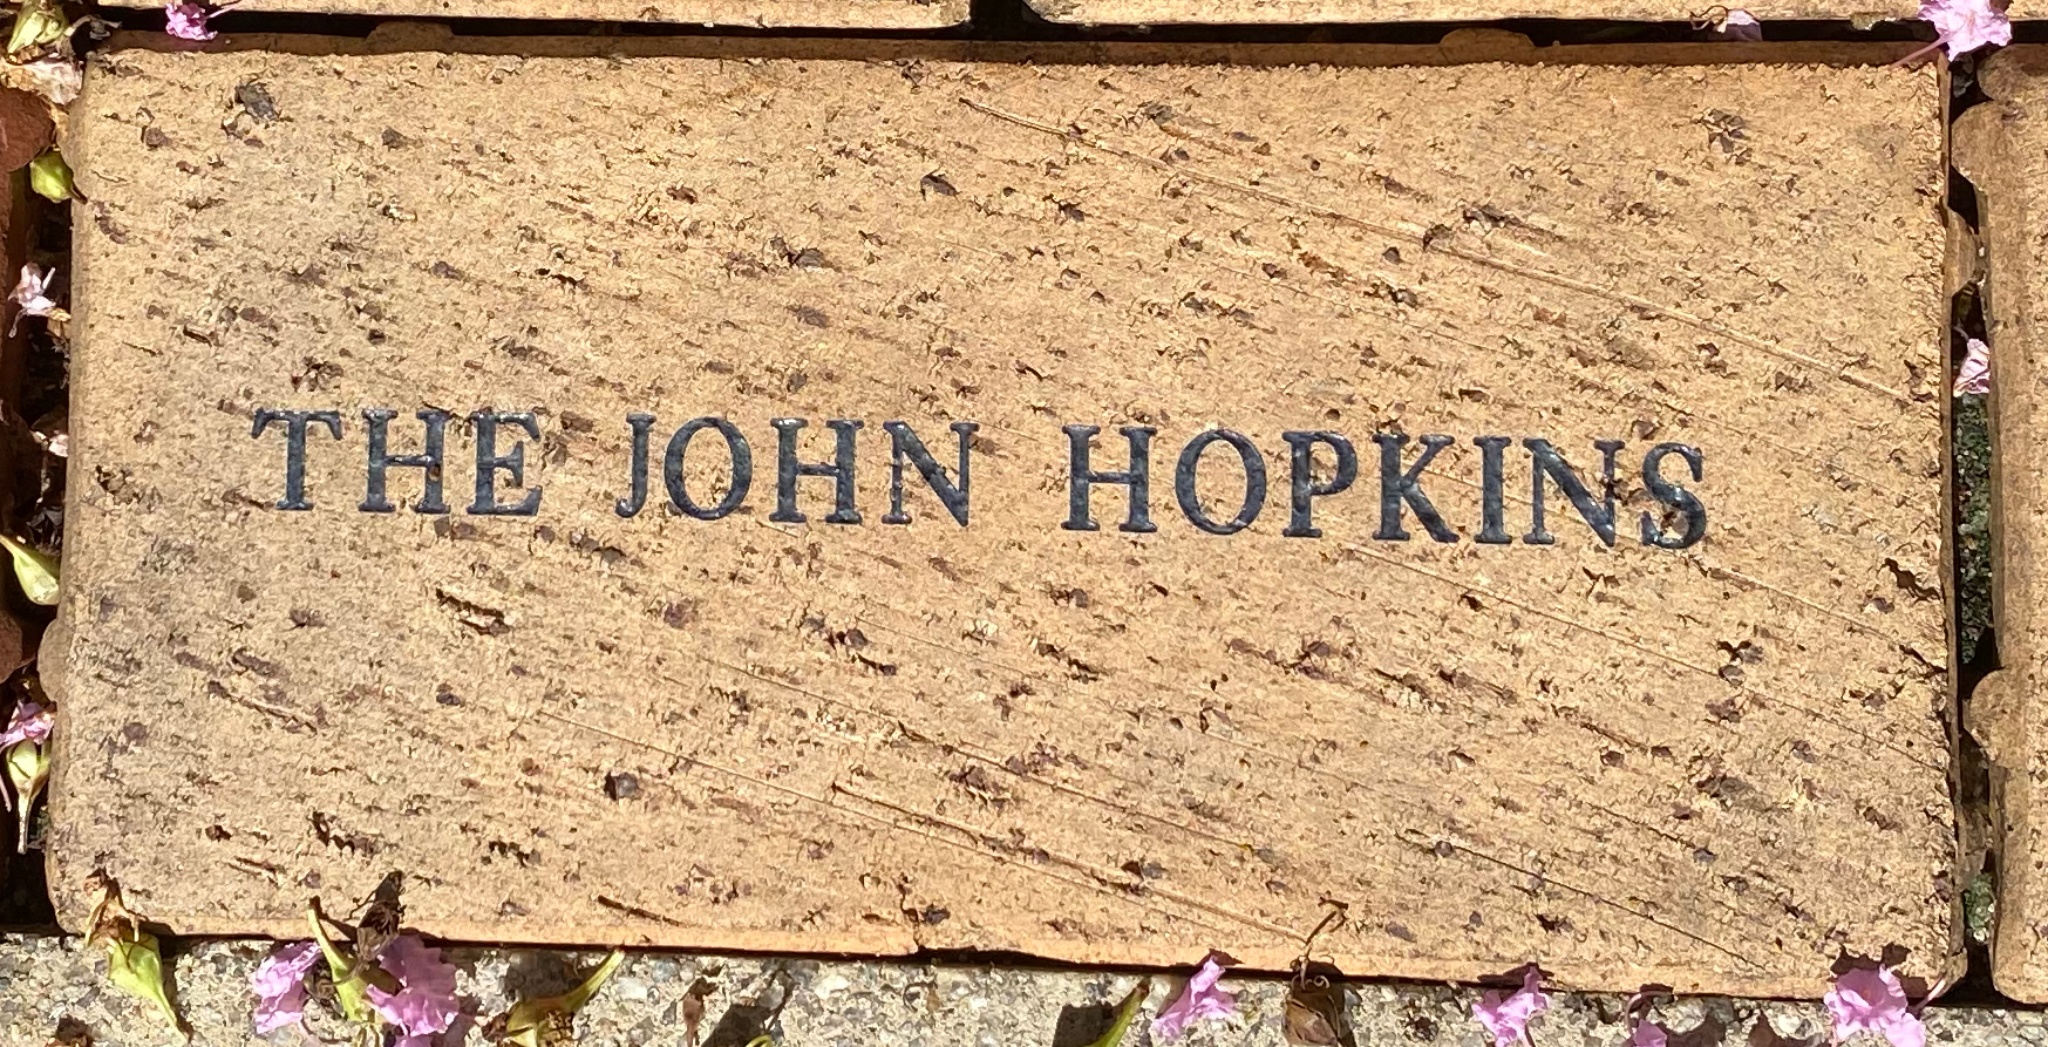 THE JOHN HOPKINS